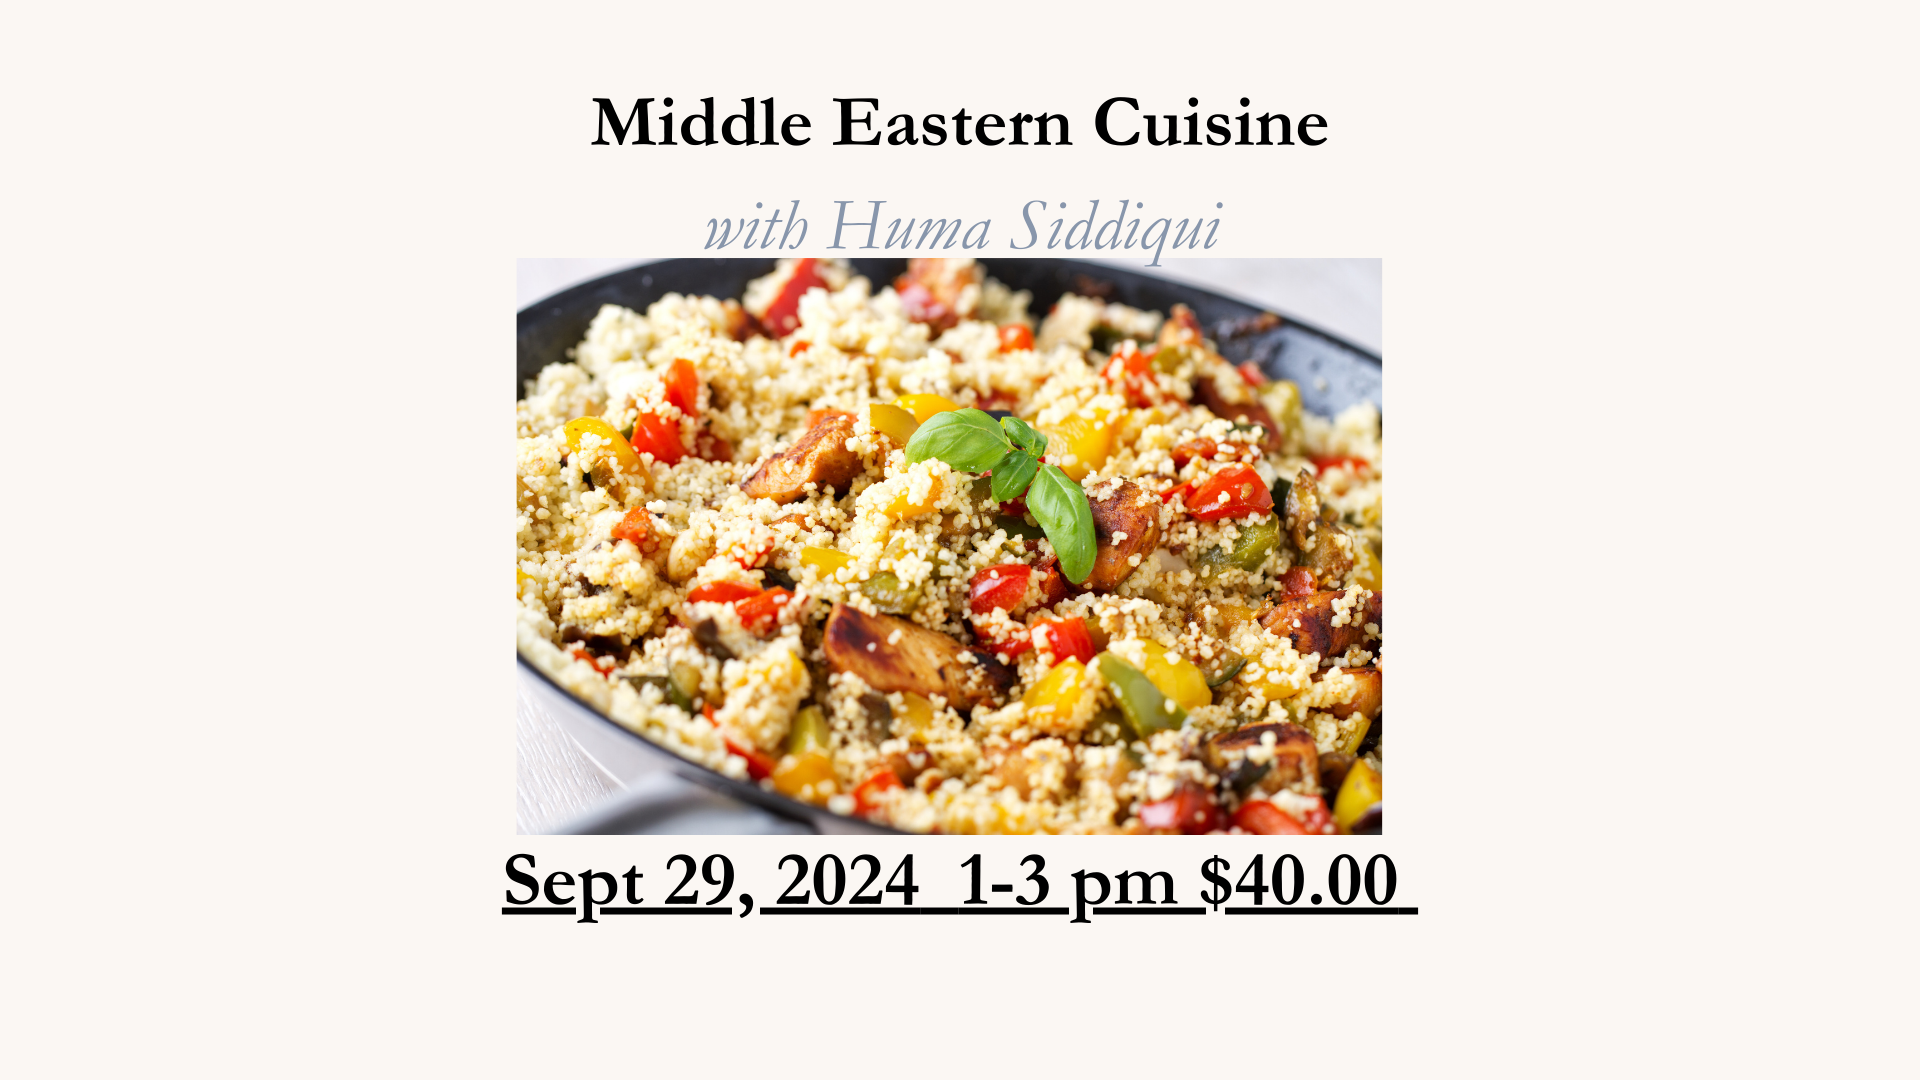 Middle Eastern Cuisine with Huma Siddiqui 9/29/24 $40